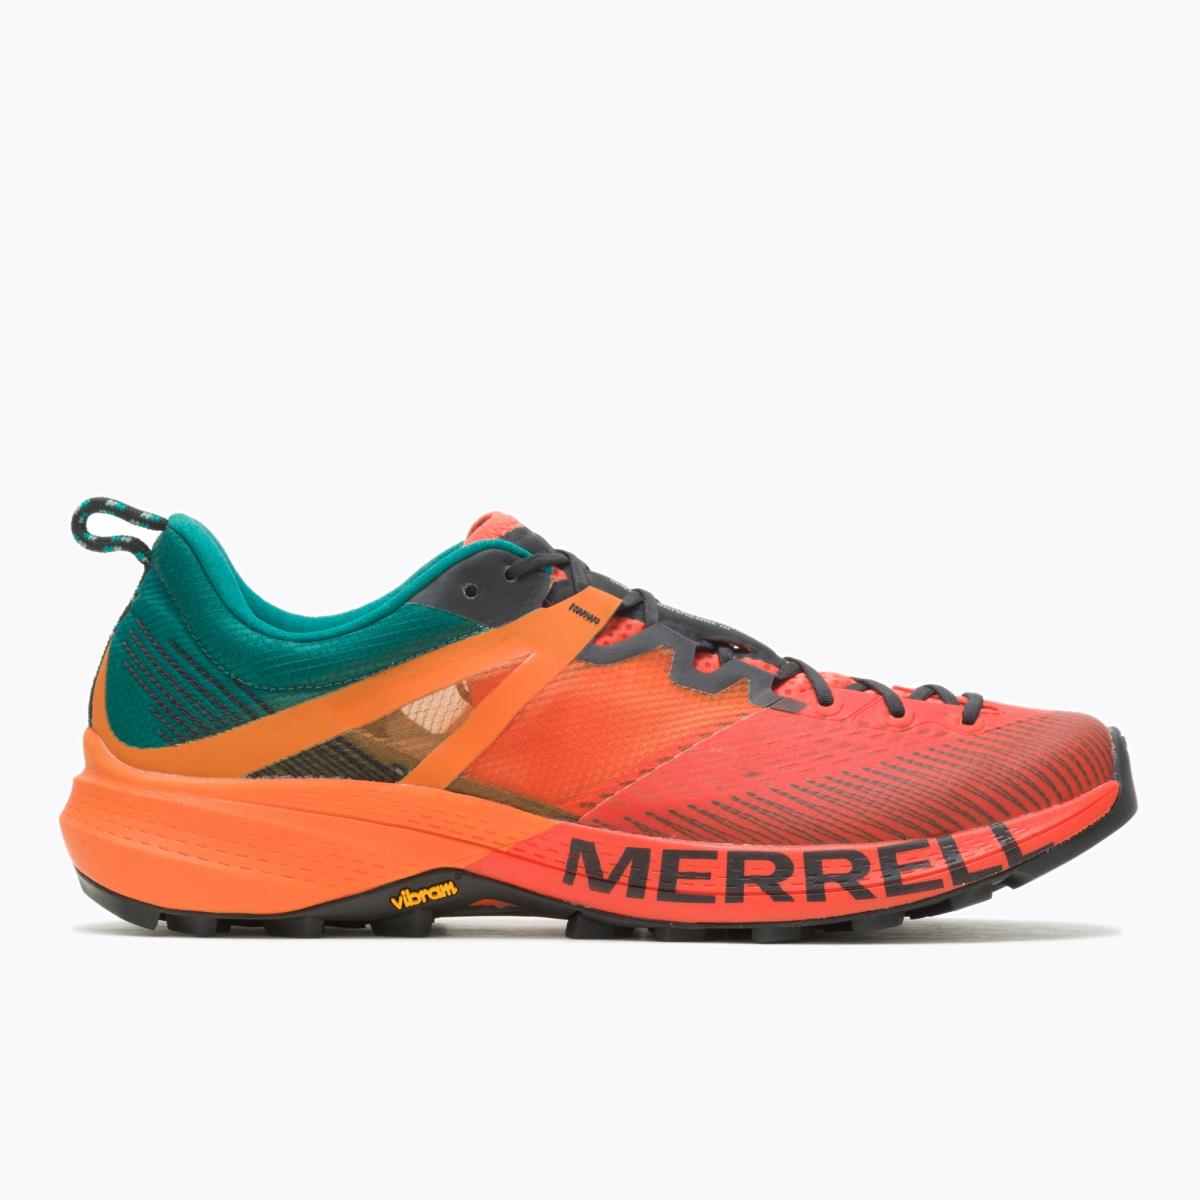 Merrell Men Mtl Mqm Shoes Tangerine/Mineral